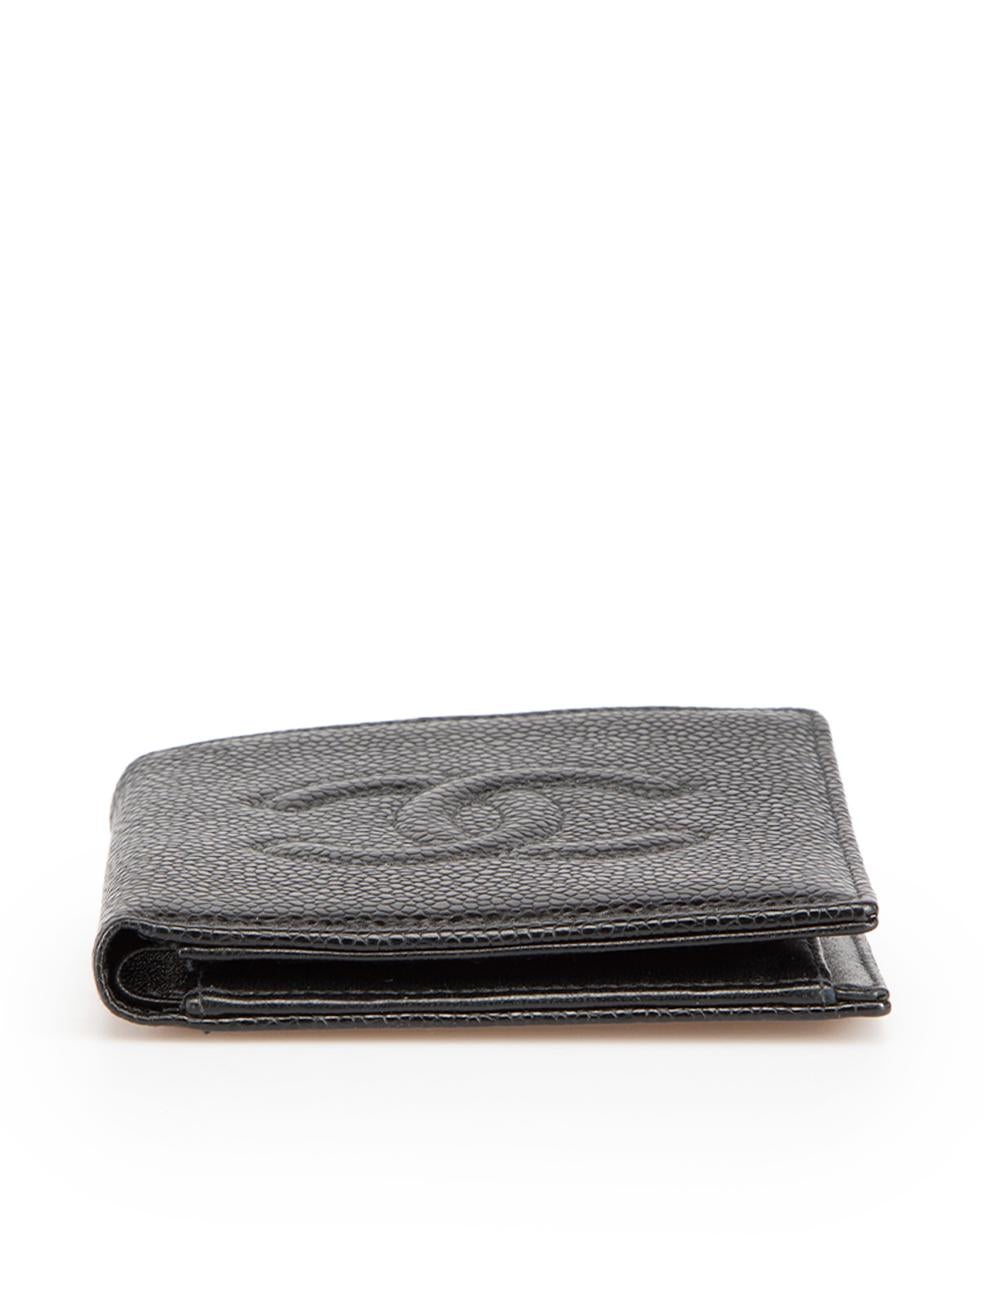 Women's Chanel Black Leather CC Bifold Wallet